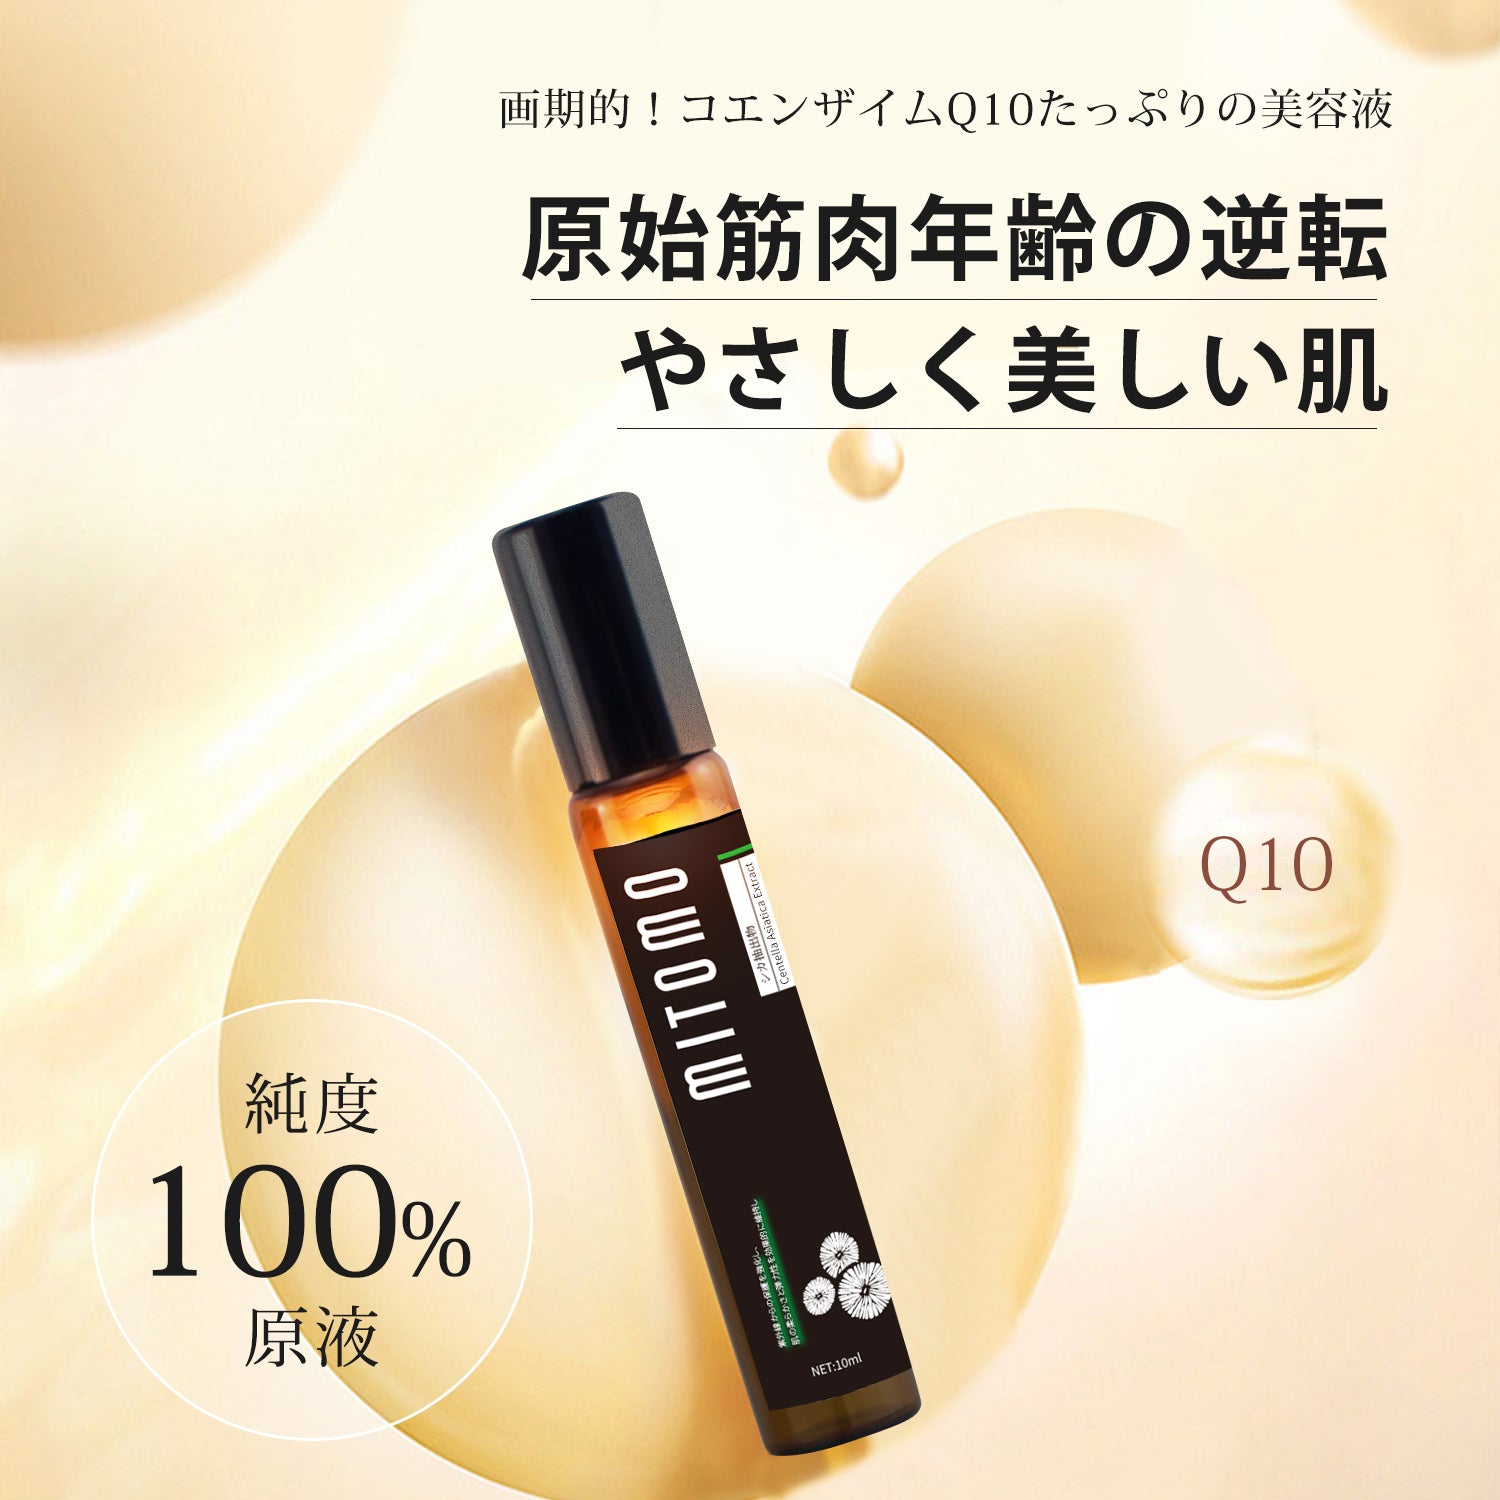 MITOMO 日本製Q10 エキススキンケア 潤い 保湿 フアンペアボトル10mlエキス【EXSA00006-02-010】